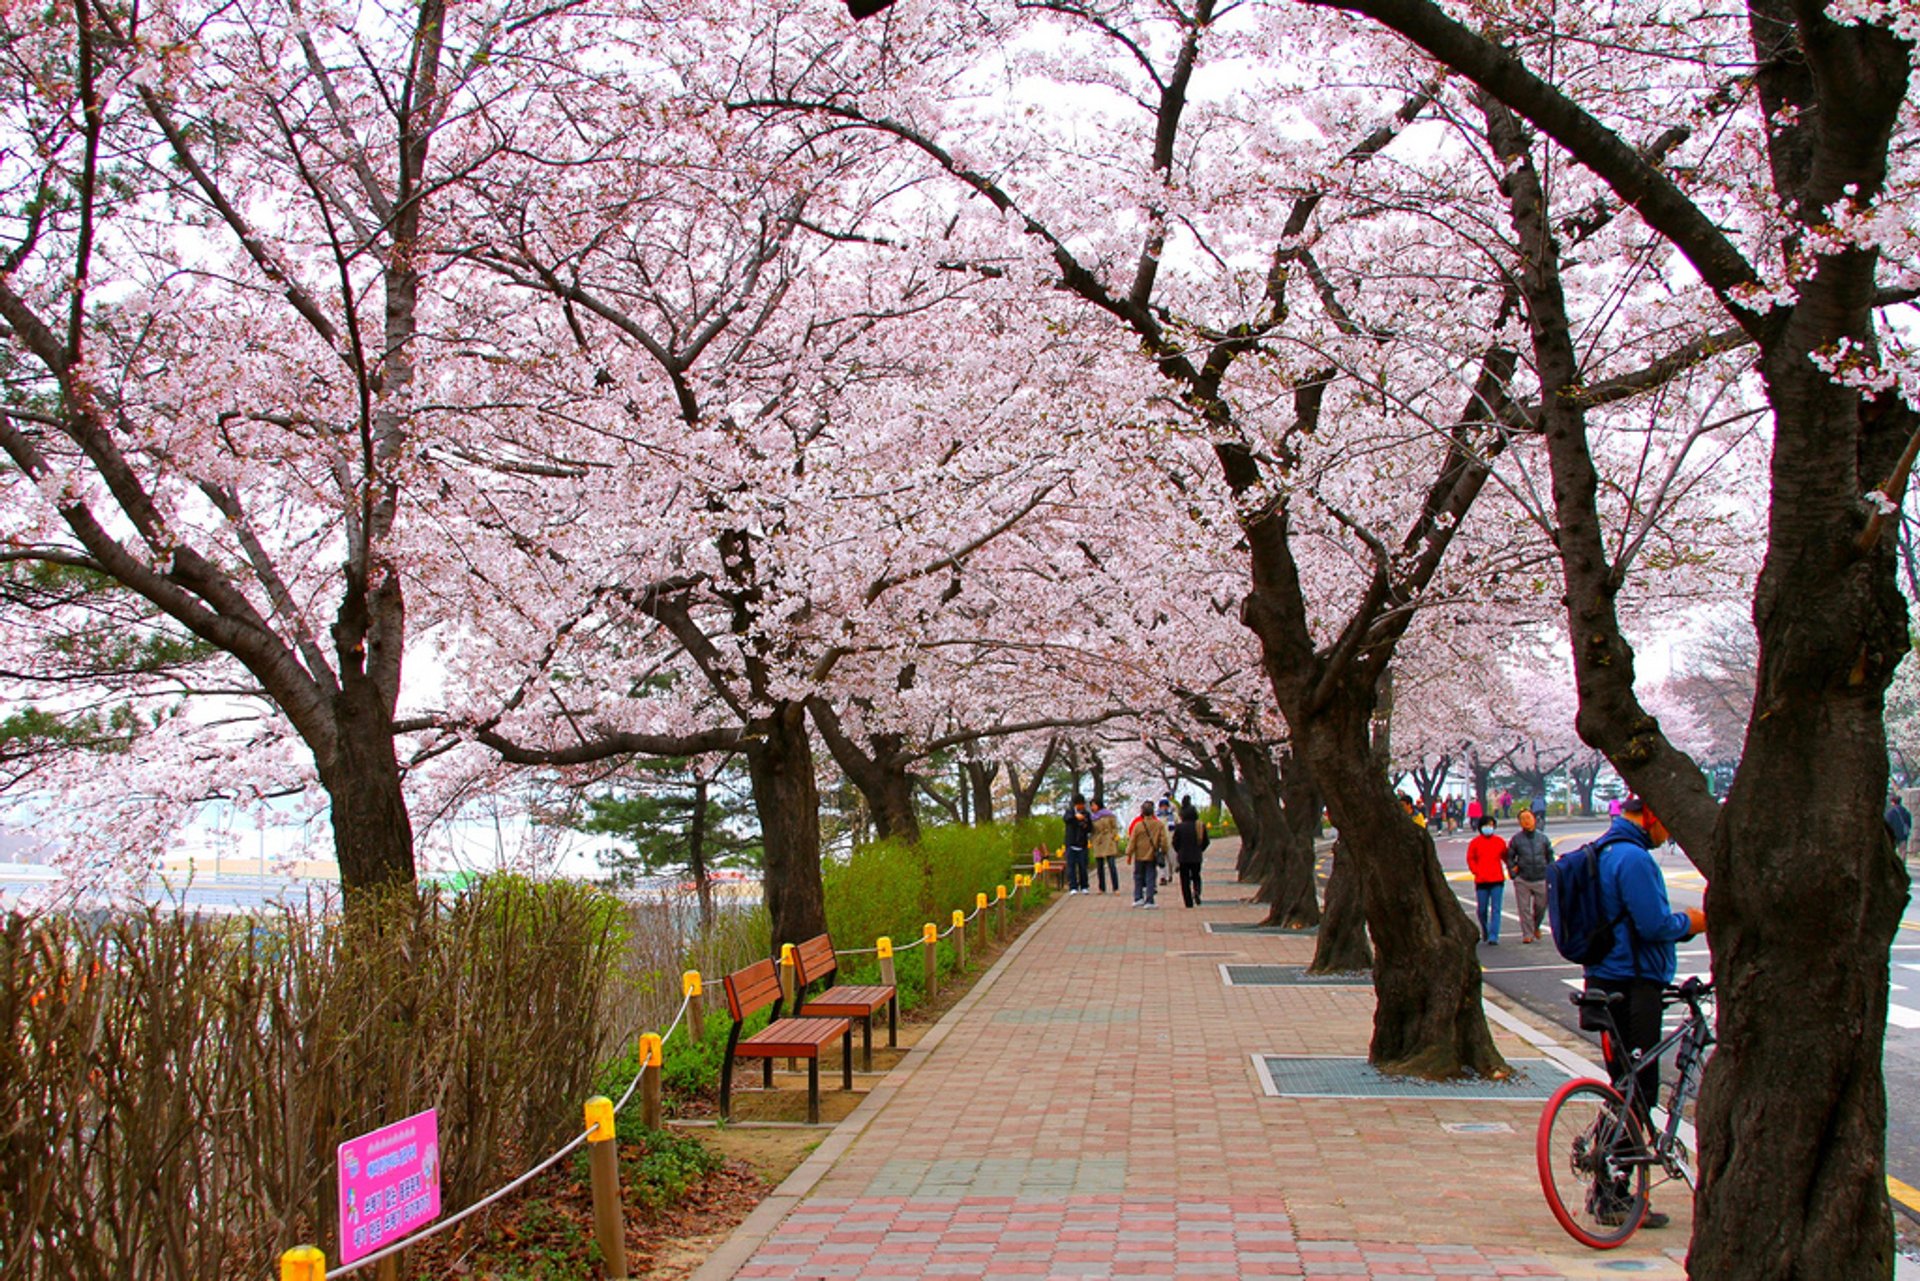 Walk through Yeouido Park